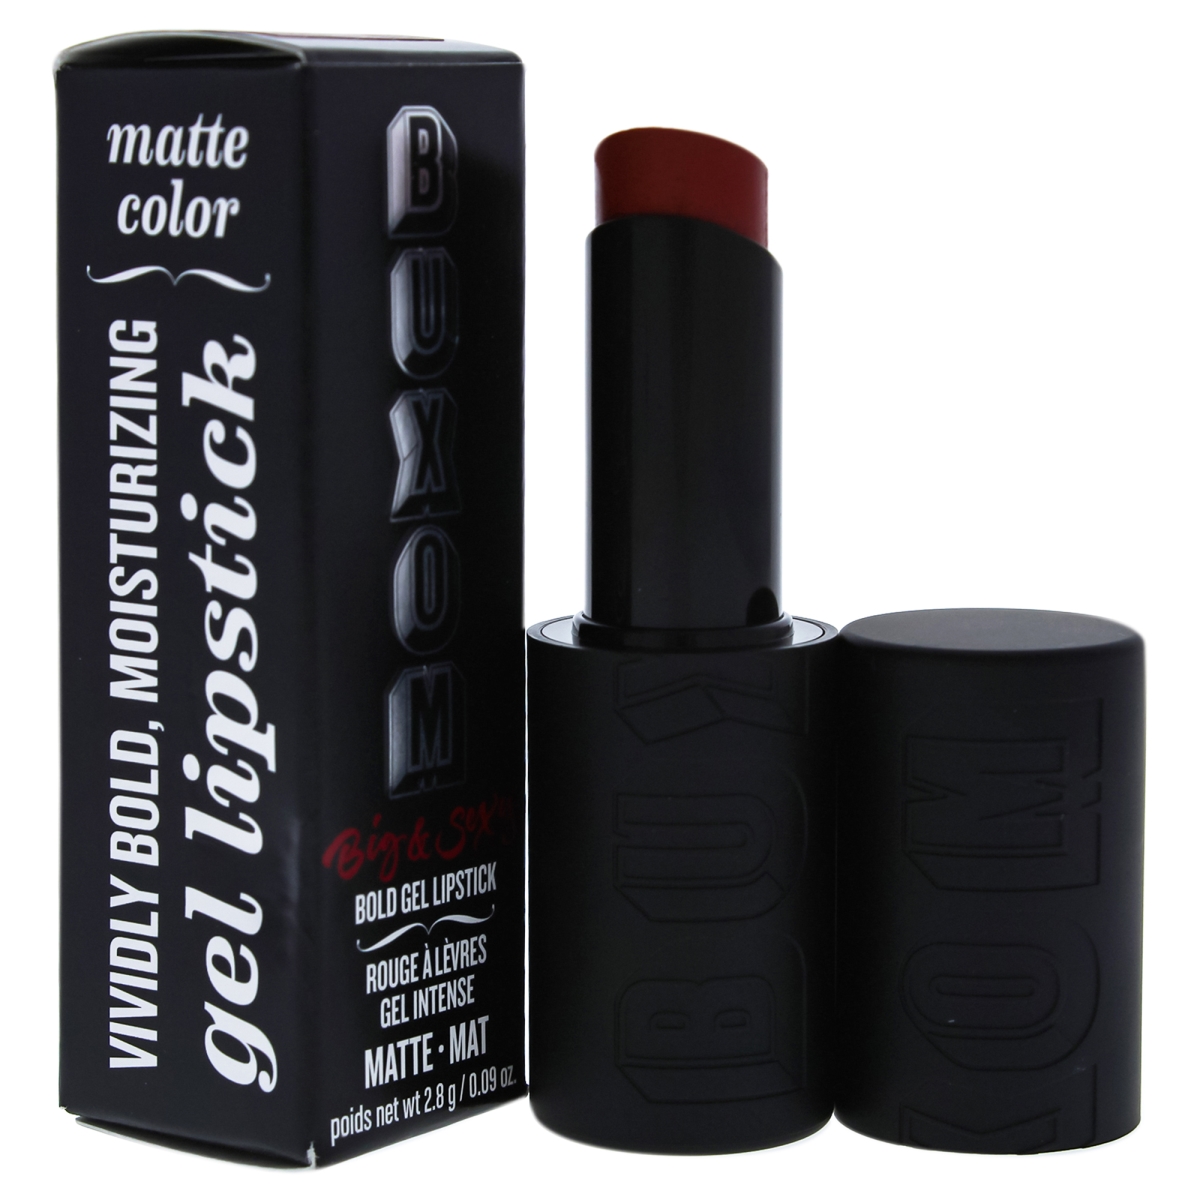 I0086607 0.09 Oz Big & Sexy Bold Gel Lipstick For Womens - Classified Crimson